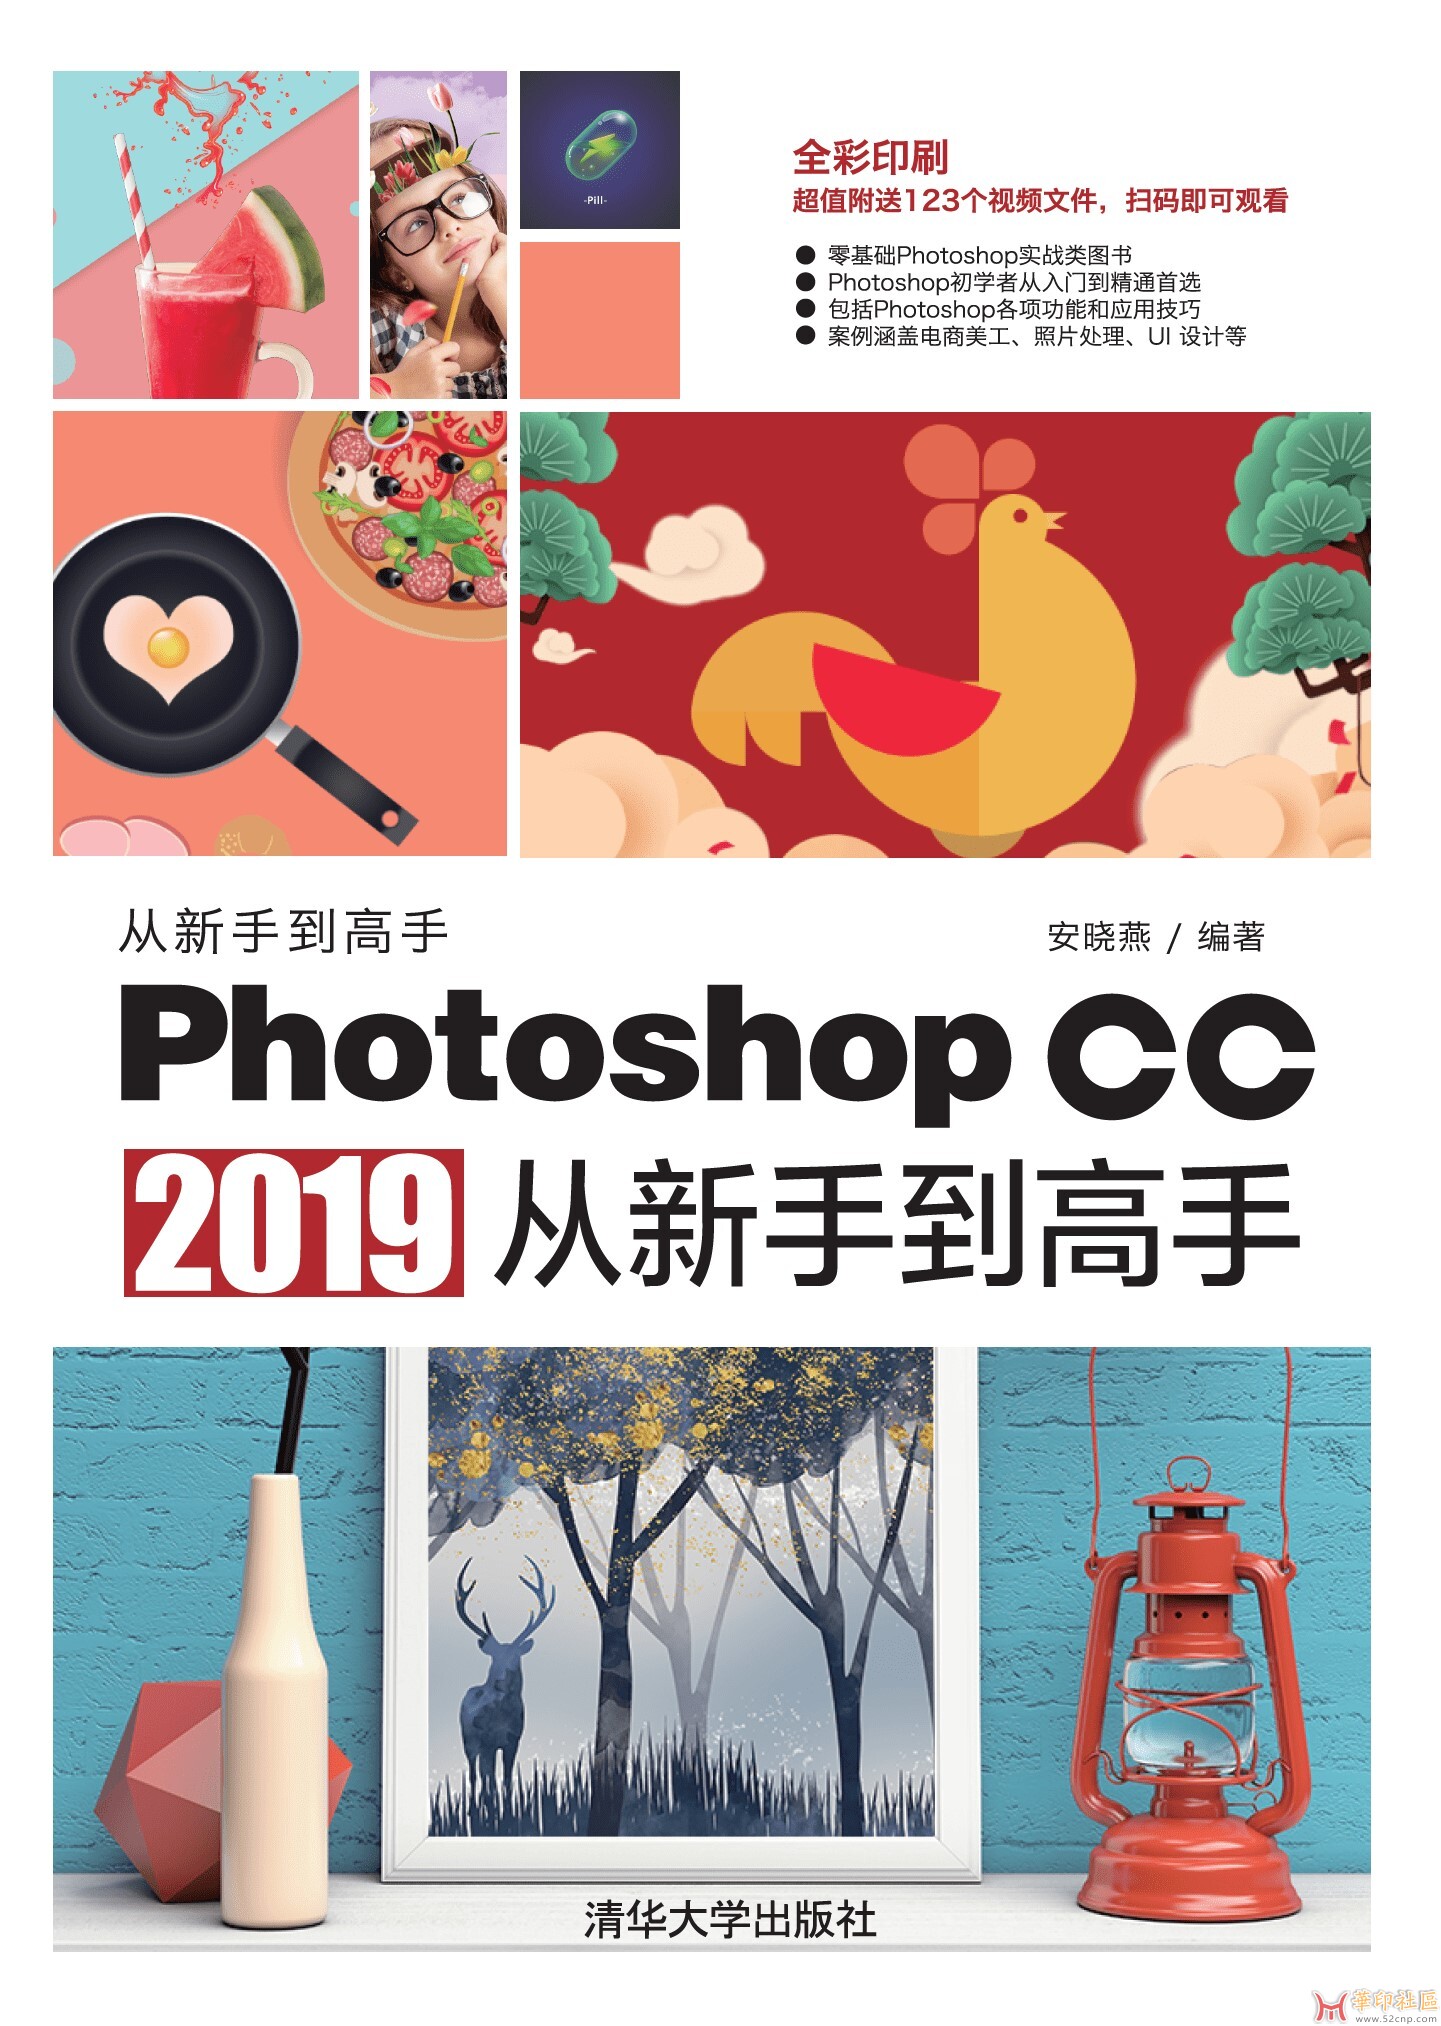 Photoshop CC 2019 从新手到高手(PDF电子书){tag}(1)